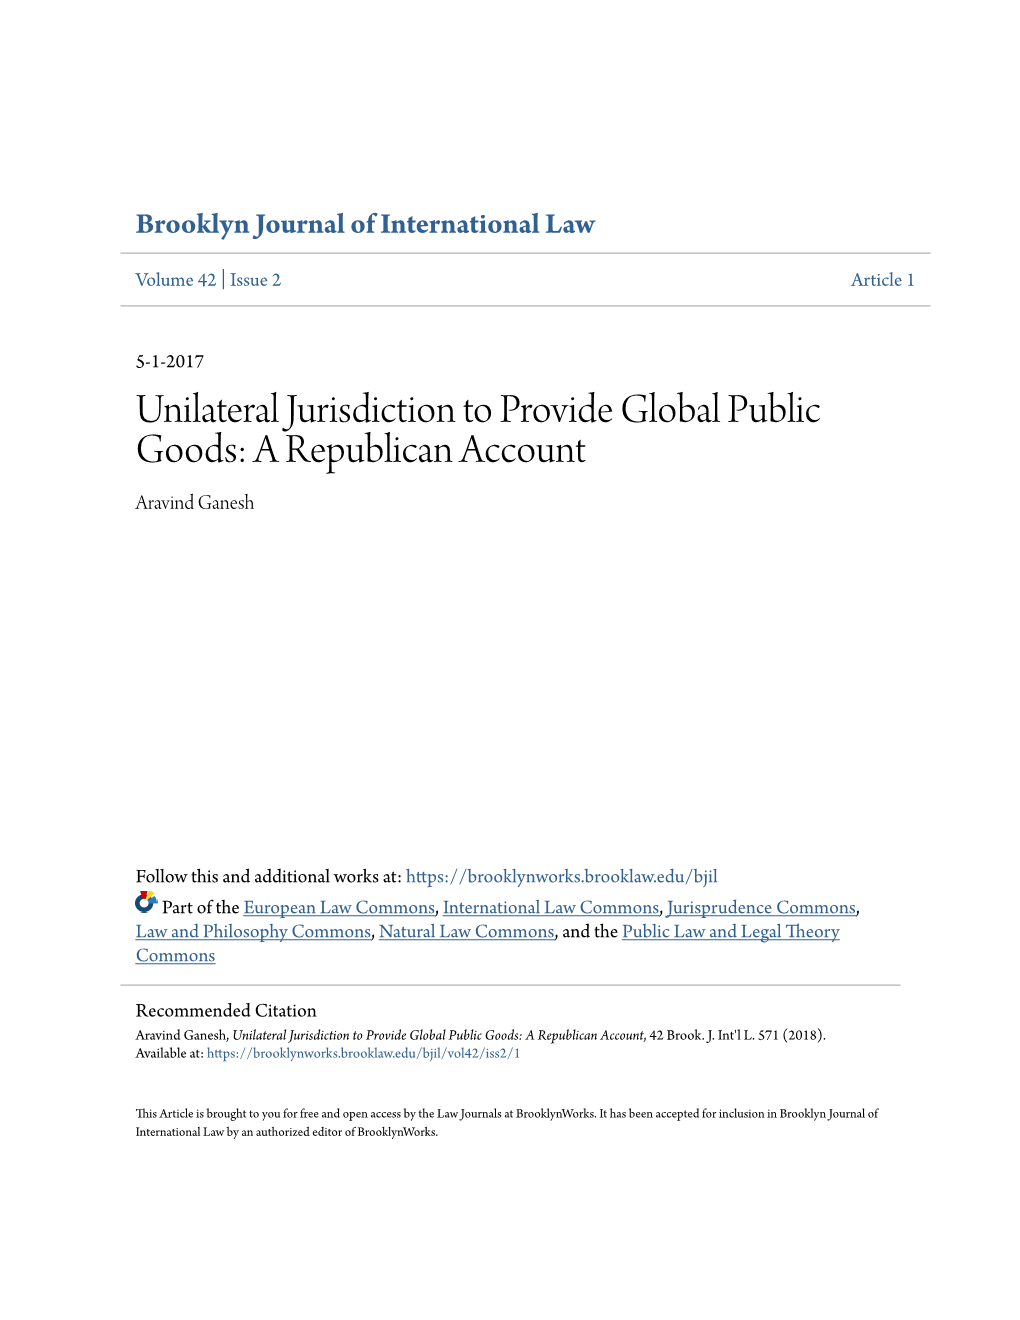 Unilateral Jurisdiction to Provide Global Public Goods: a Republican Account Aravind Ganesh